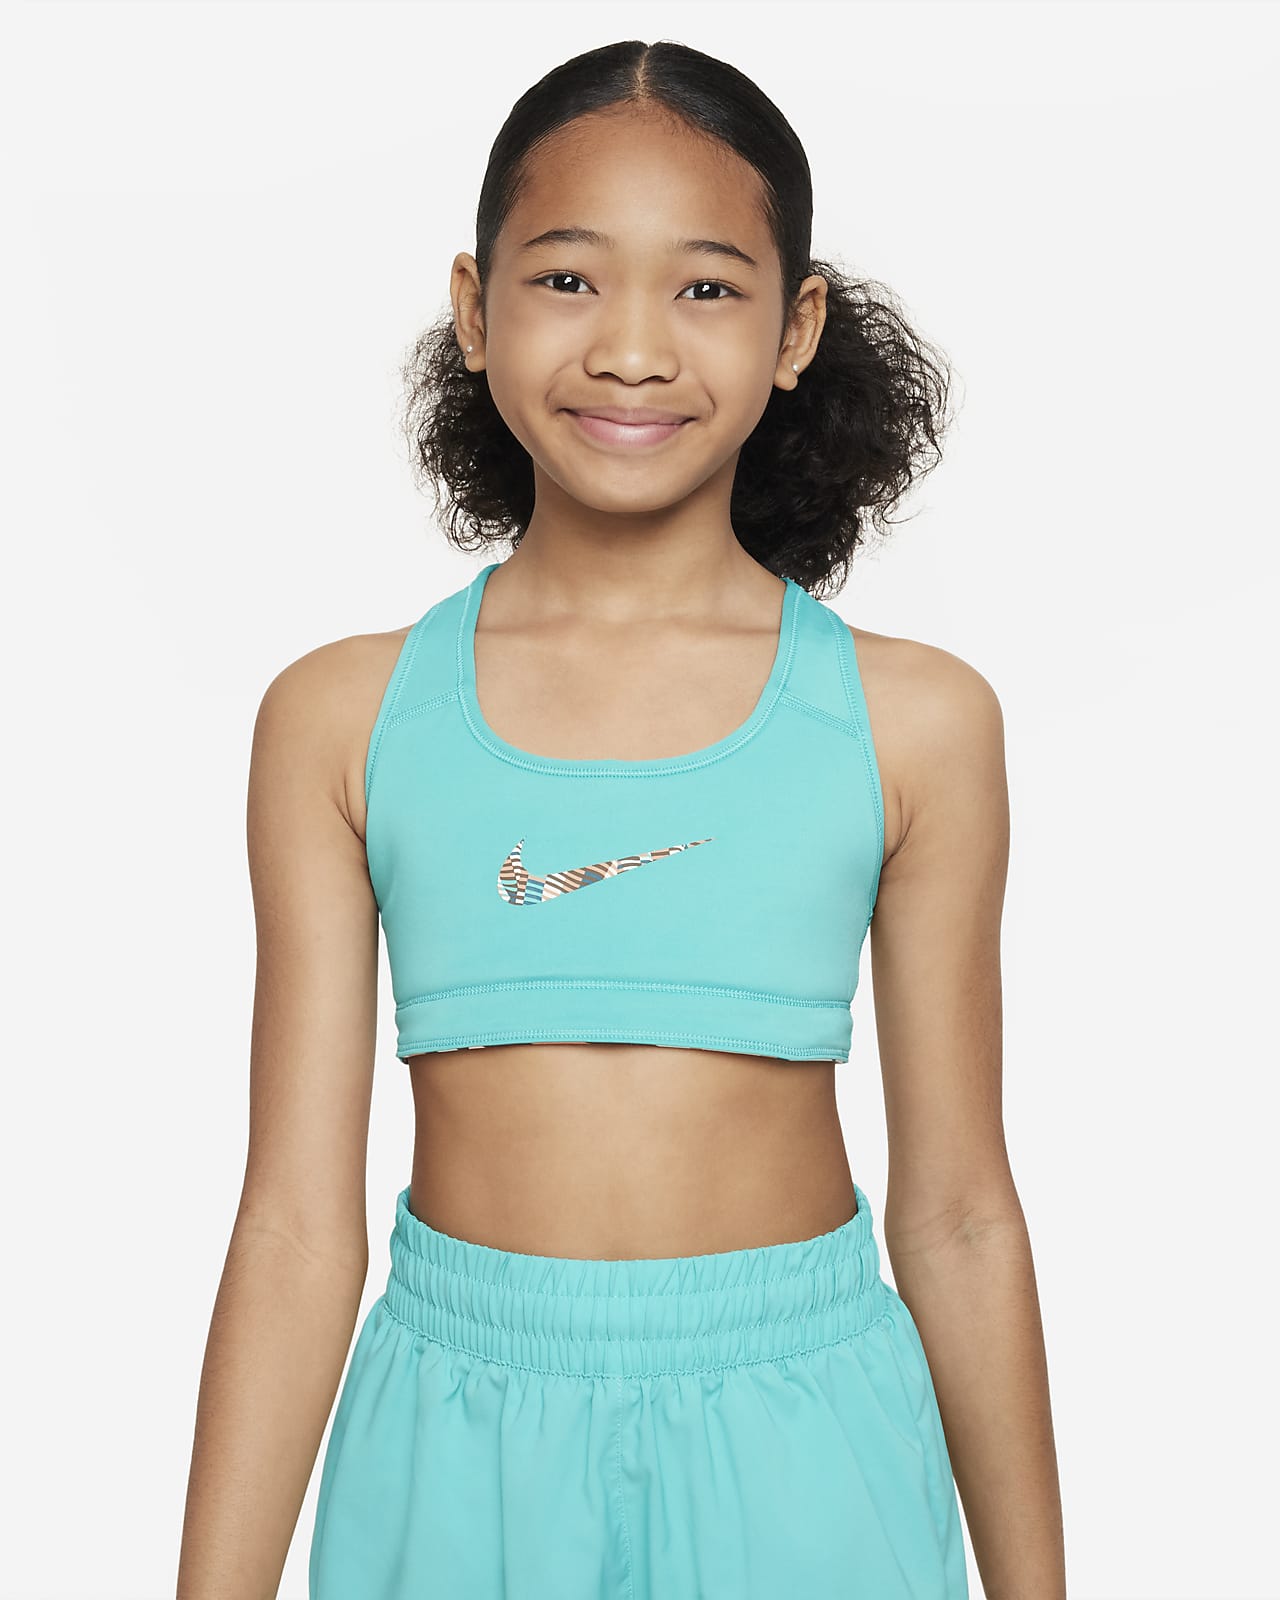 Nike Girls' Seamless Sports Bra 